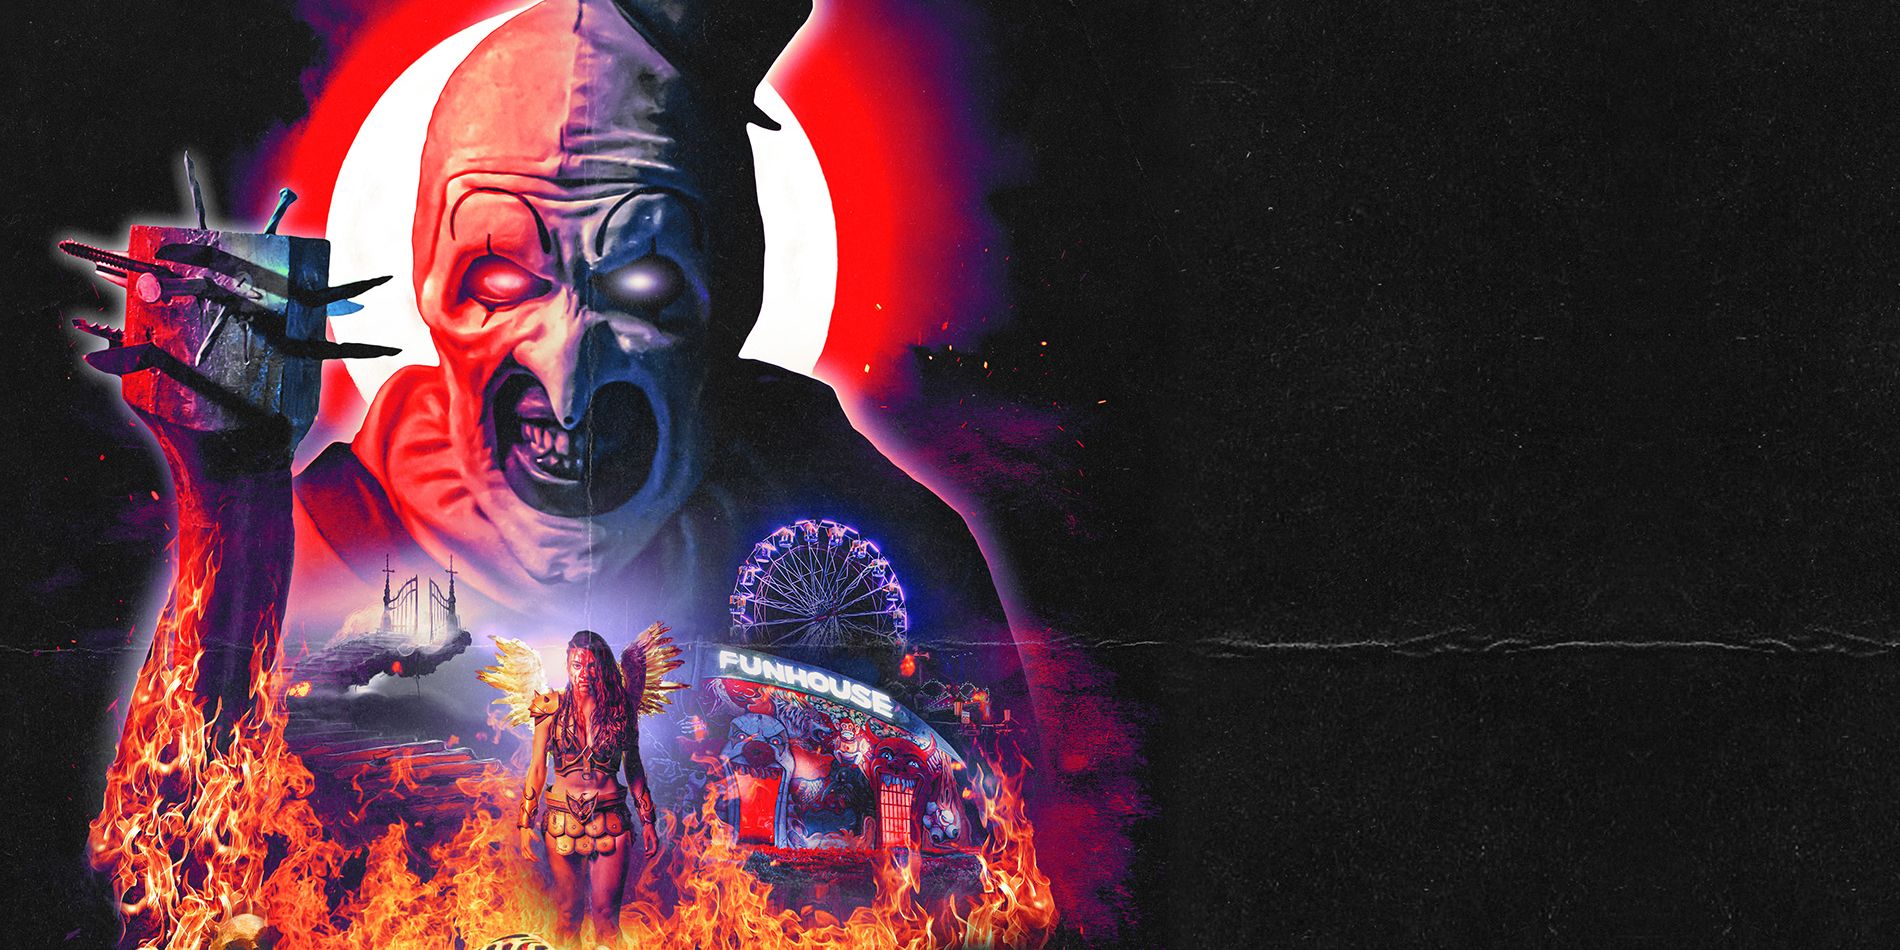 Damien Leone's Terrifier 2 Official Poster David Howard Thorton as Art the Clown Carnival